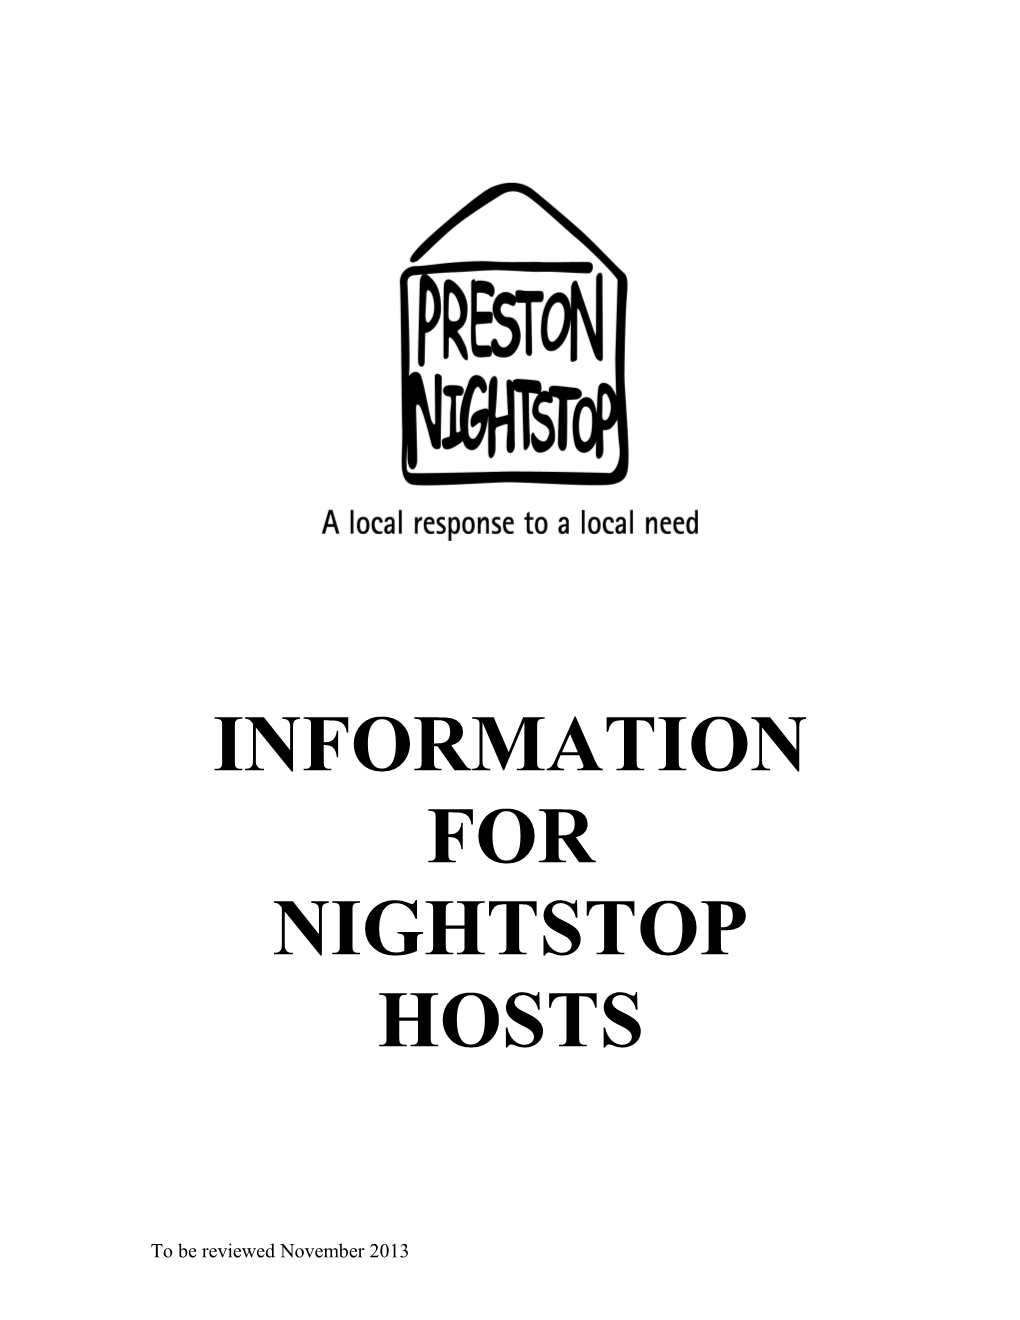 What Is Preston Nightstop?